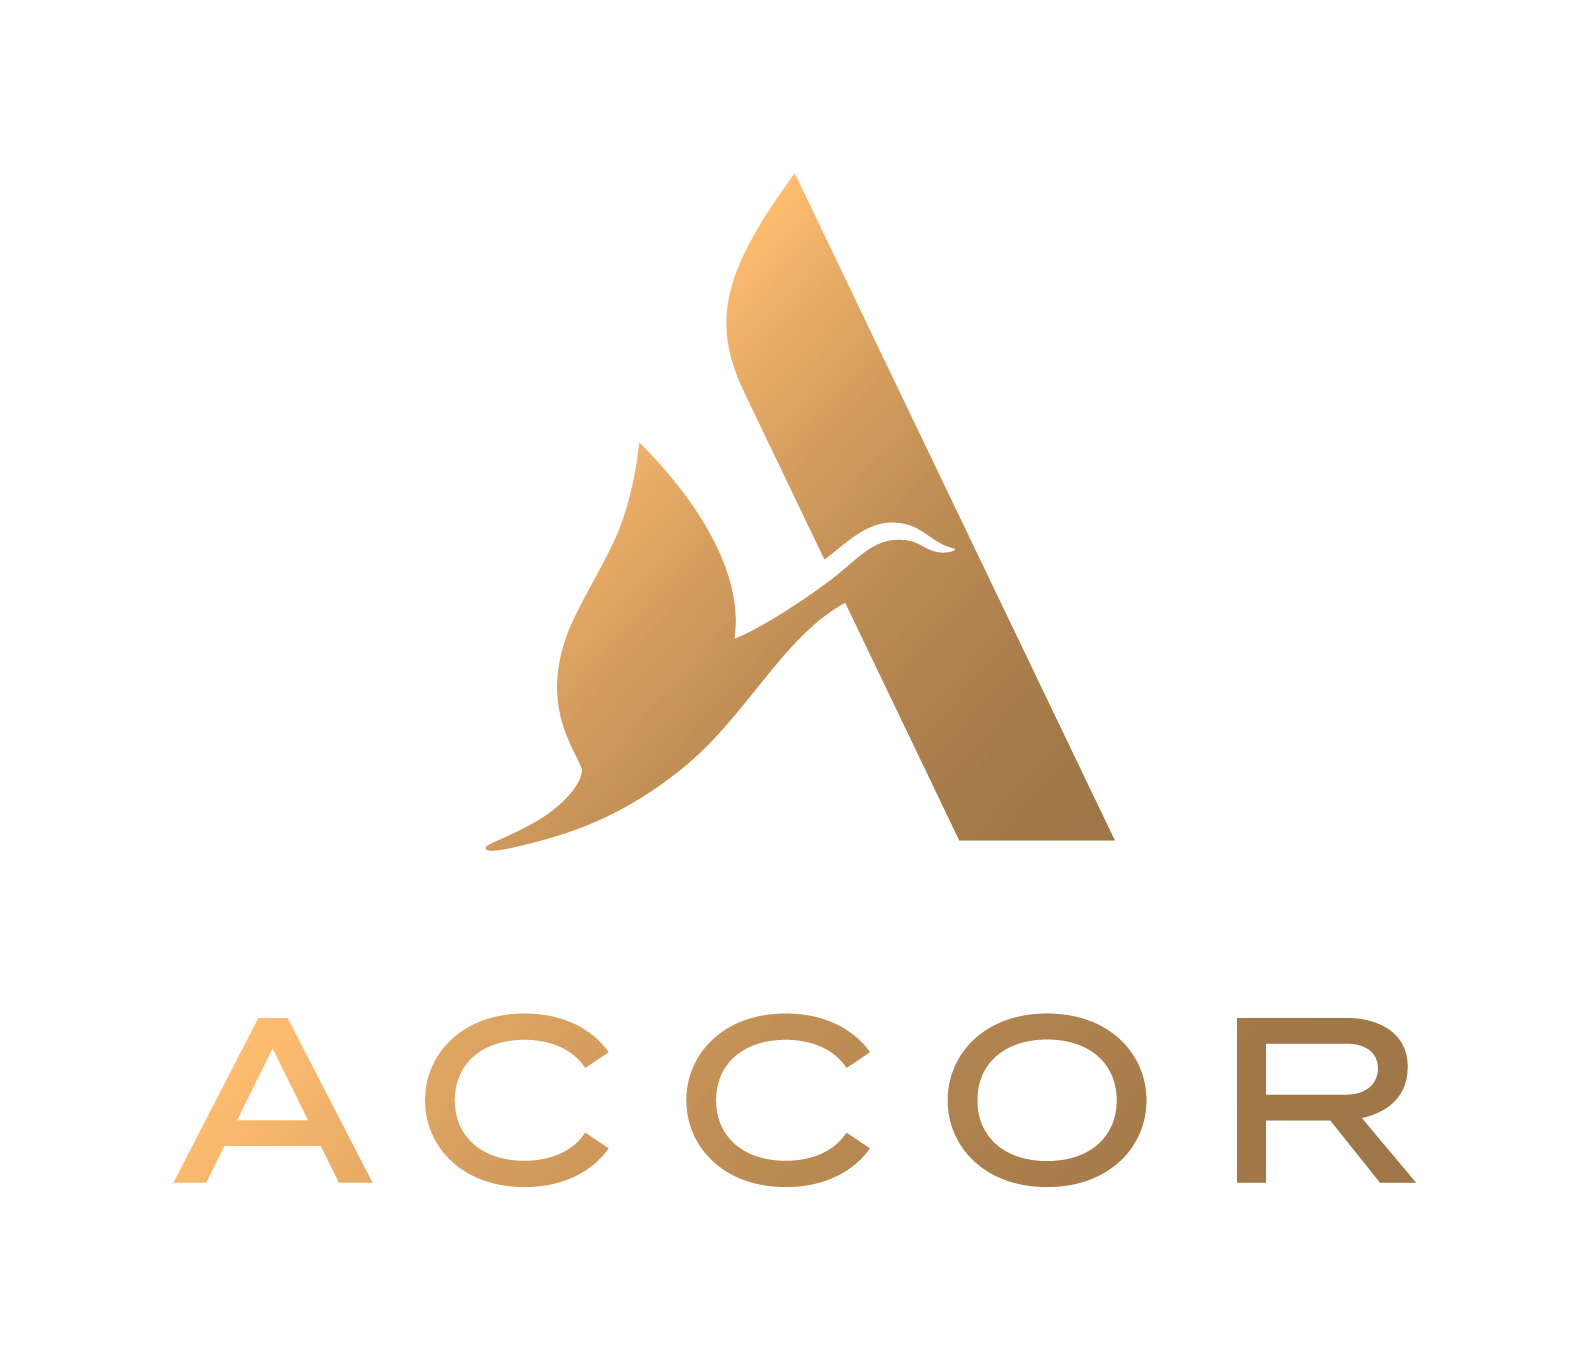 Accor_logo_Or_4C.jpg